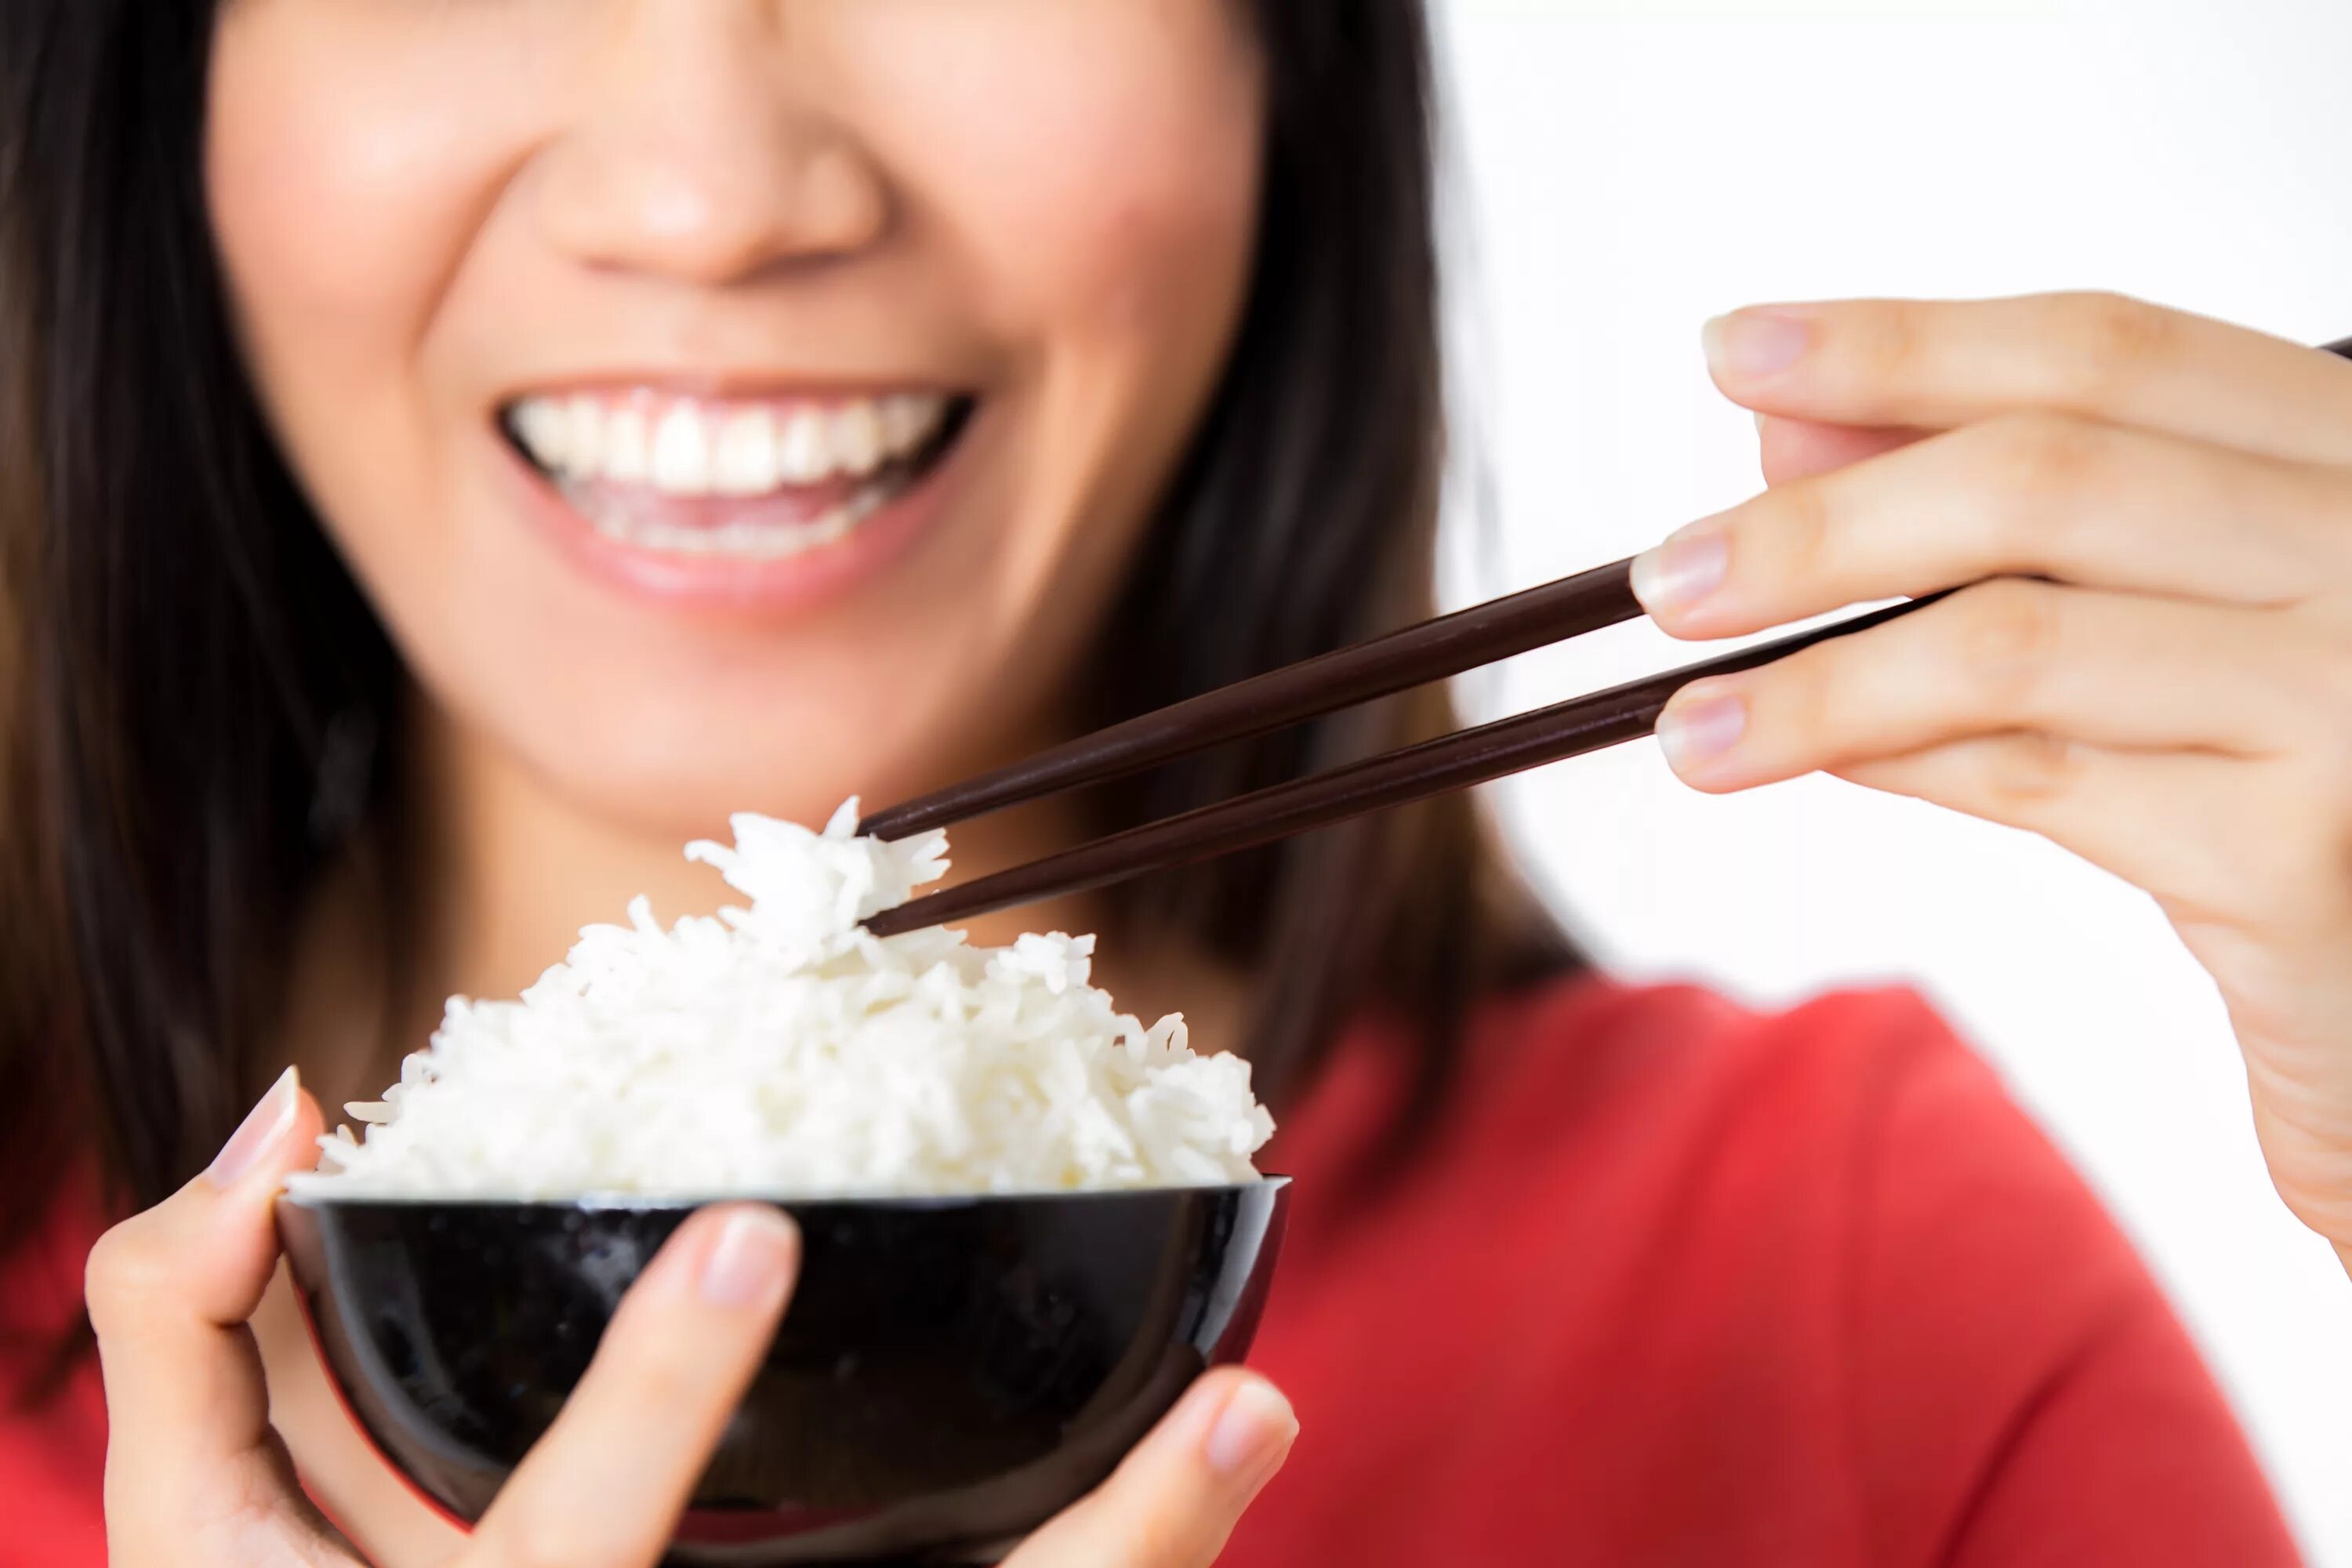 Девушка ест рис. Человек ест рис. Рис едят палочками. Китаец ест рис. Как есть рис палочками